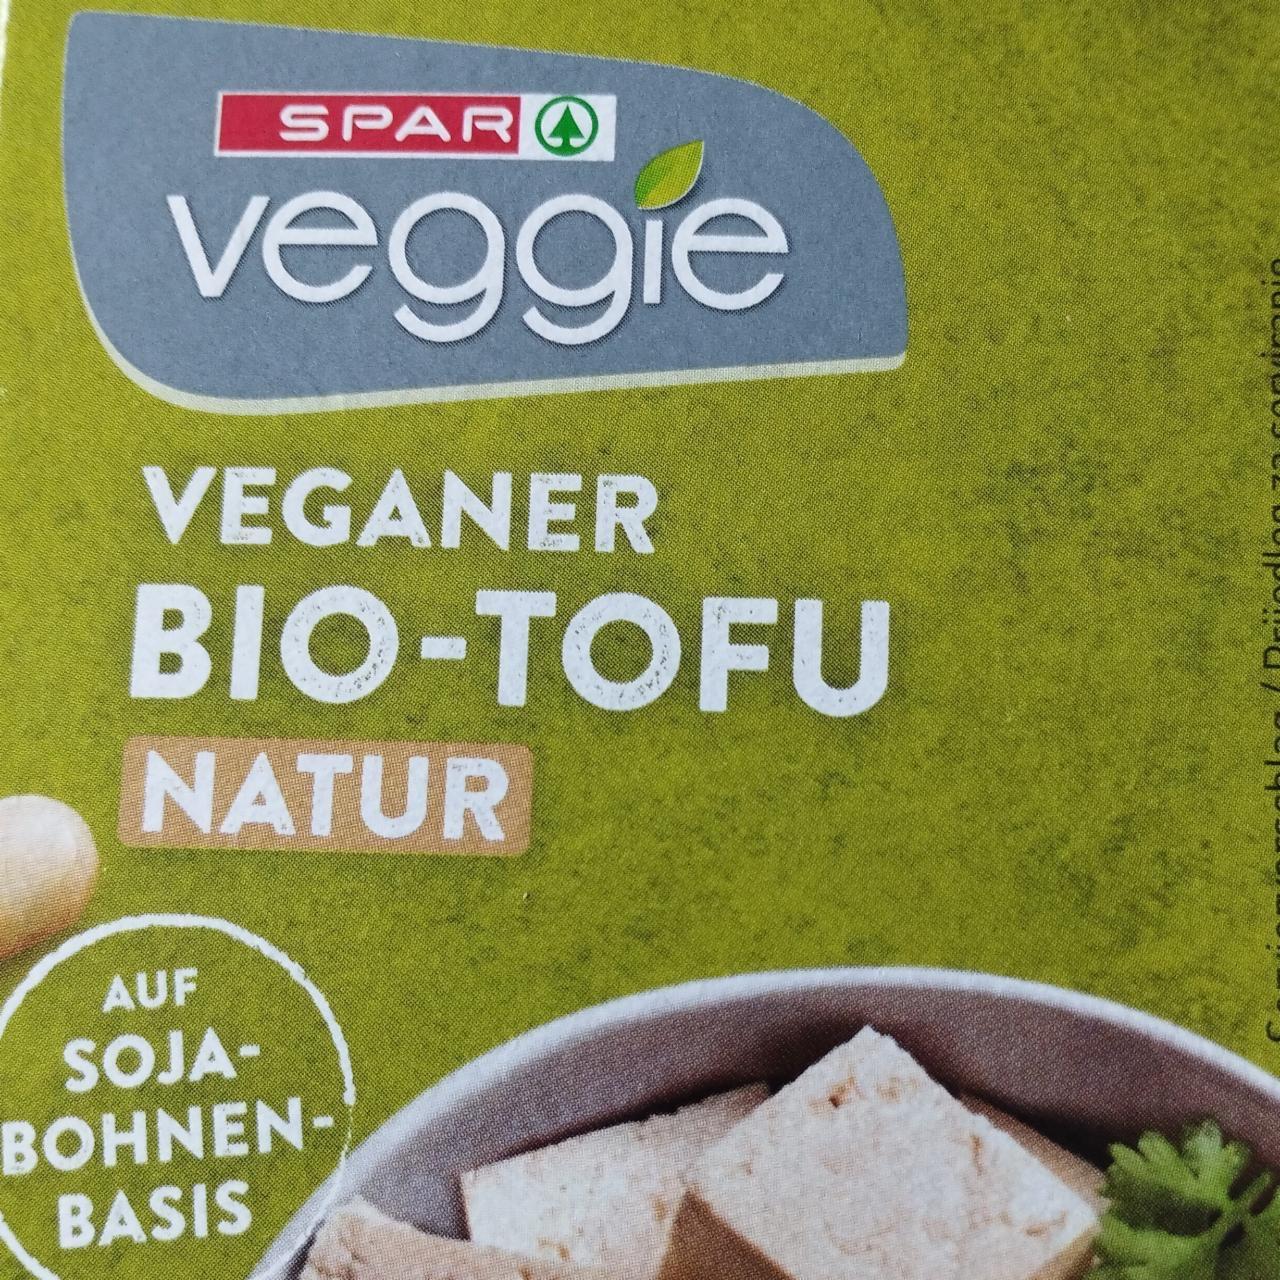 Képek - Veganer bio-tofu natur Spar Veggie